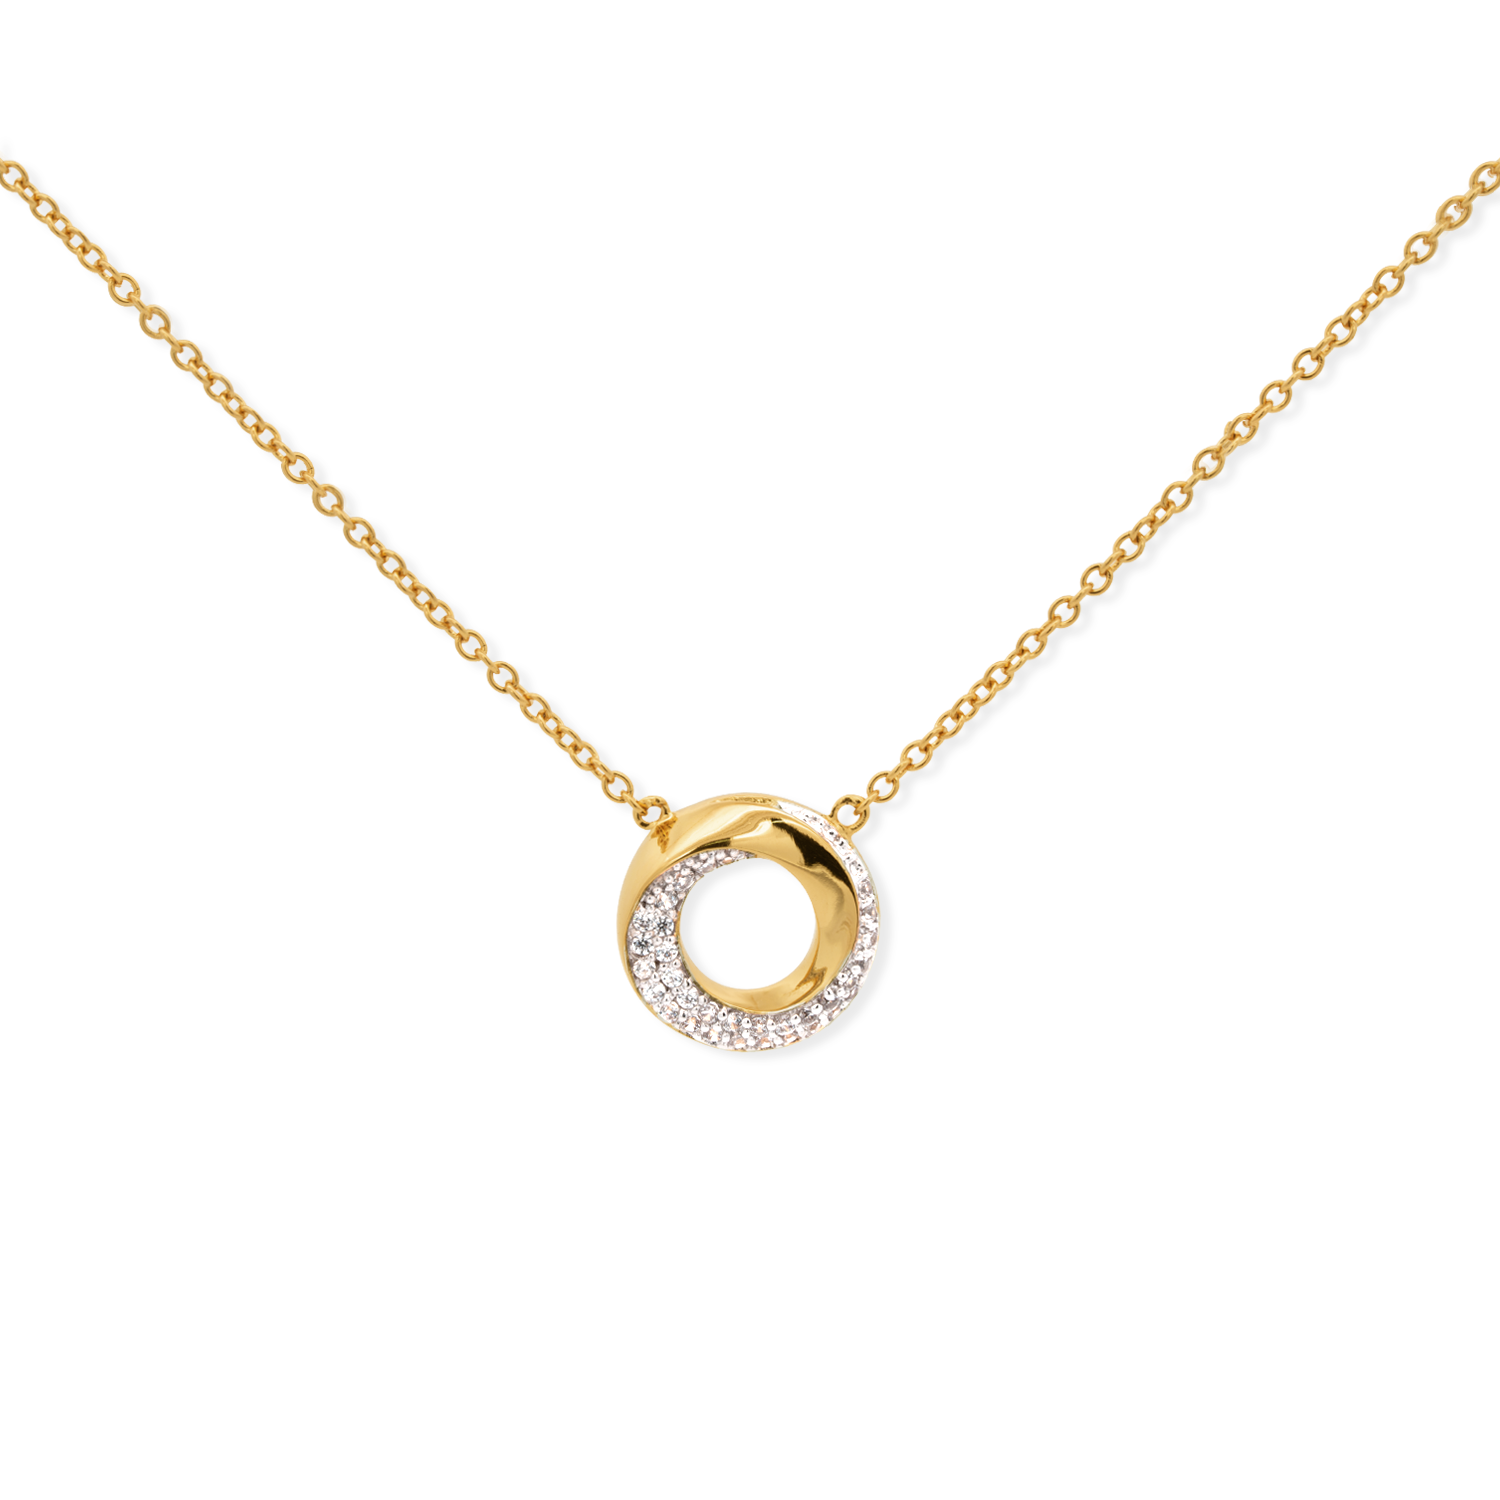 Elegant yet bold necklace. Gold pendant necklace with  cubic zirconia stones. 